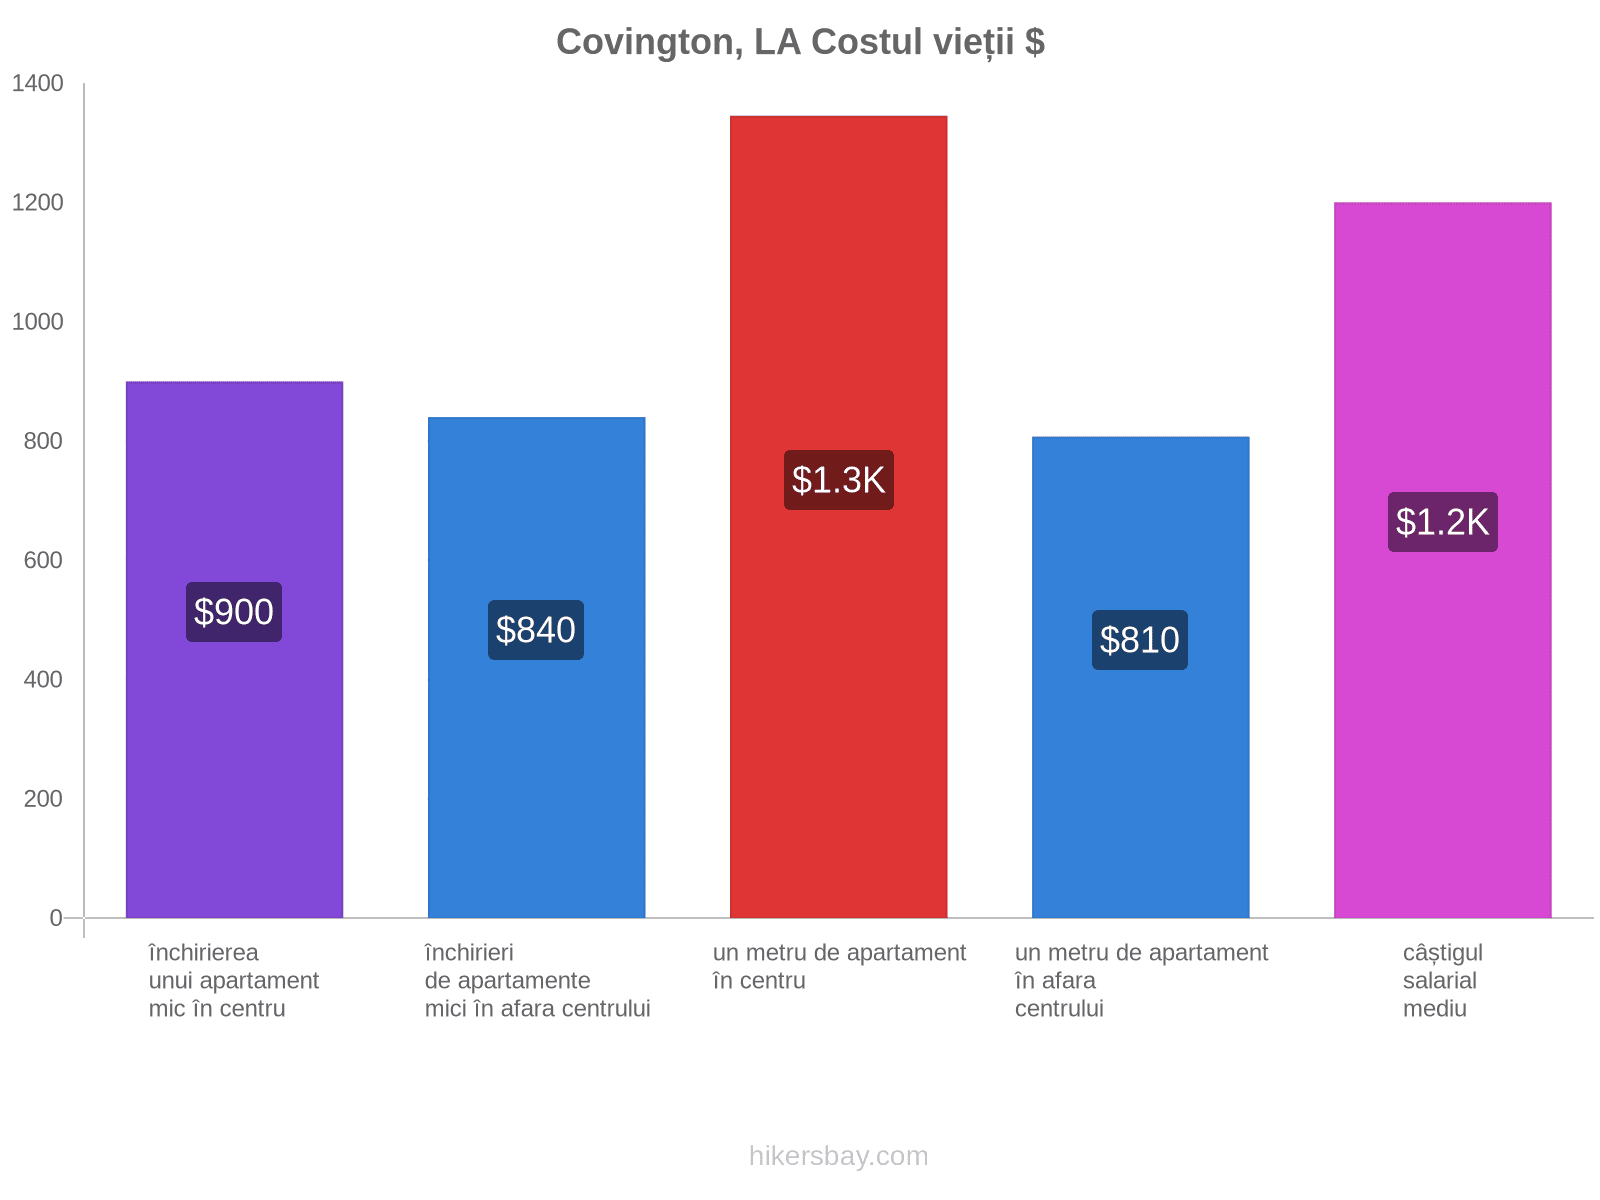 Covington, LA costul vieții hikersbay.com